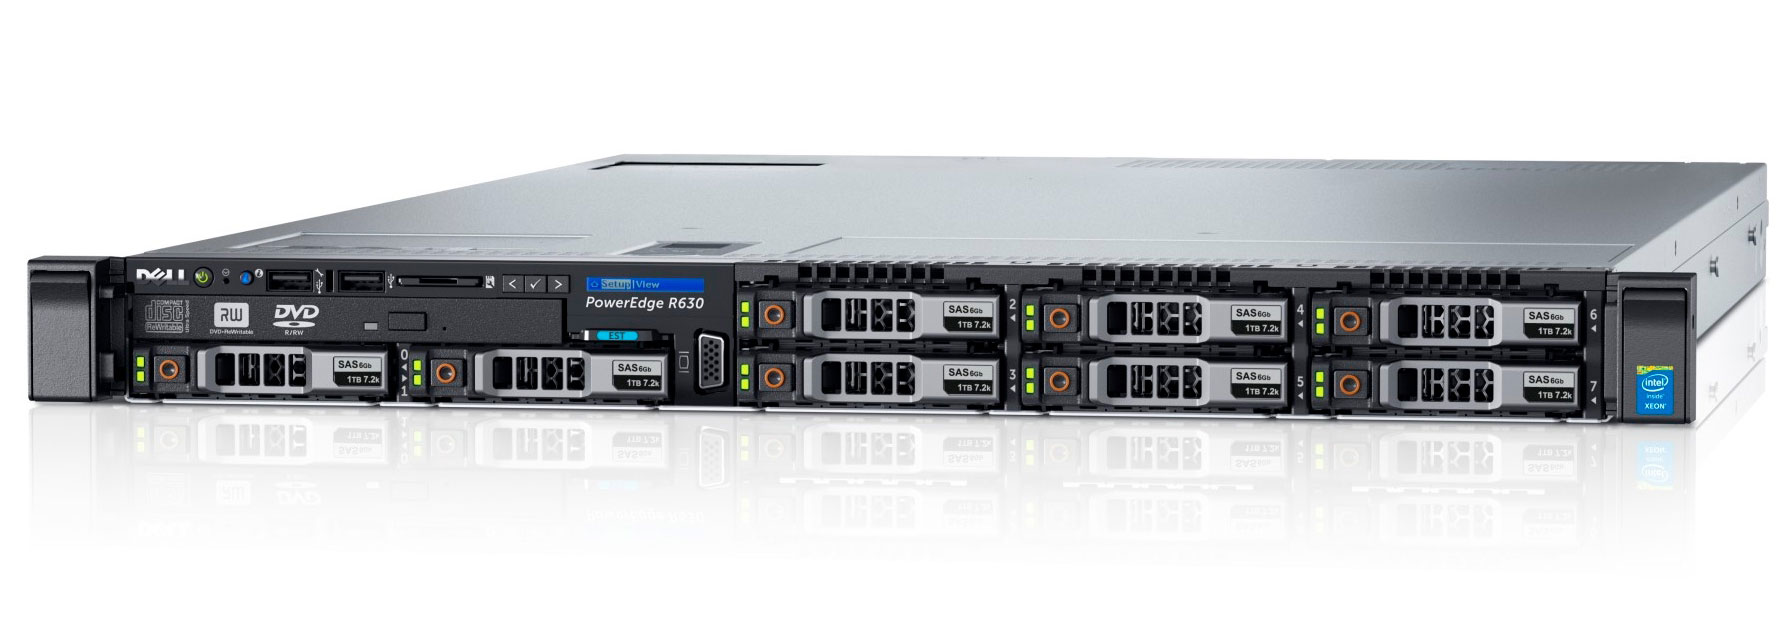 Подробное фото Сервер DELL PowerEdge R630 2x Xeon E5-2680v4 256Gb 2133P DDR4 8x noHDD 2.5" SAS RAID Perc H730, 1024Mb, DVD, 2*PSU